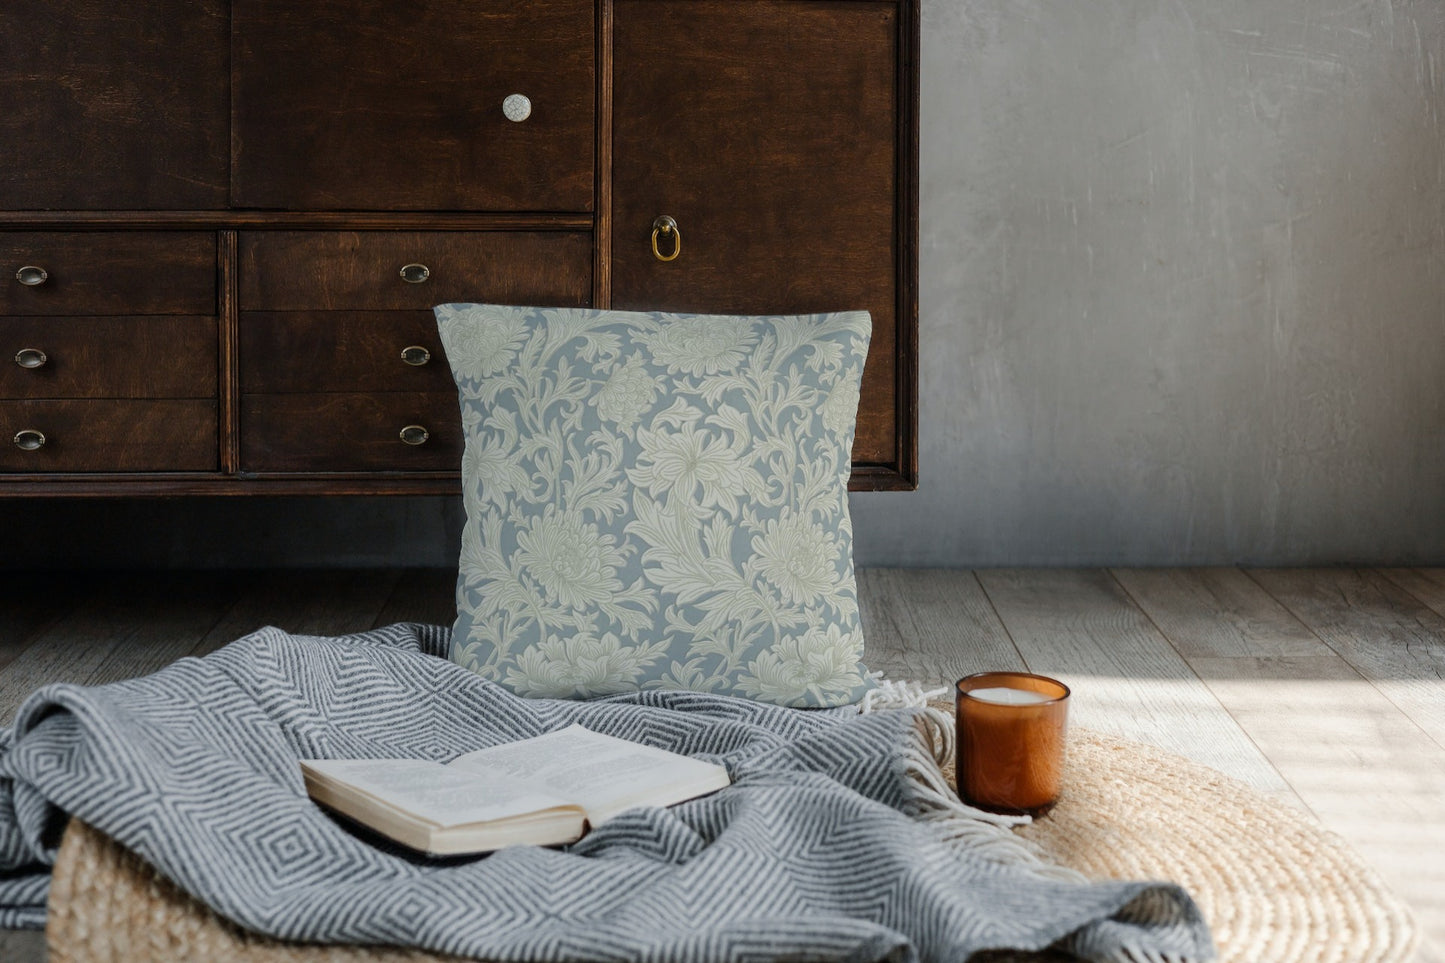 Chrysanthemum Outdoor Pillow William Morris Blue Toile